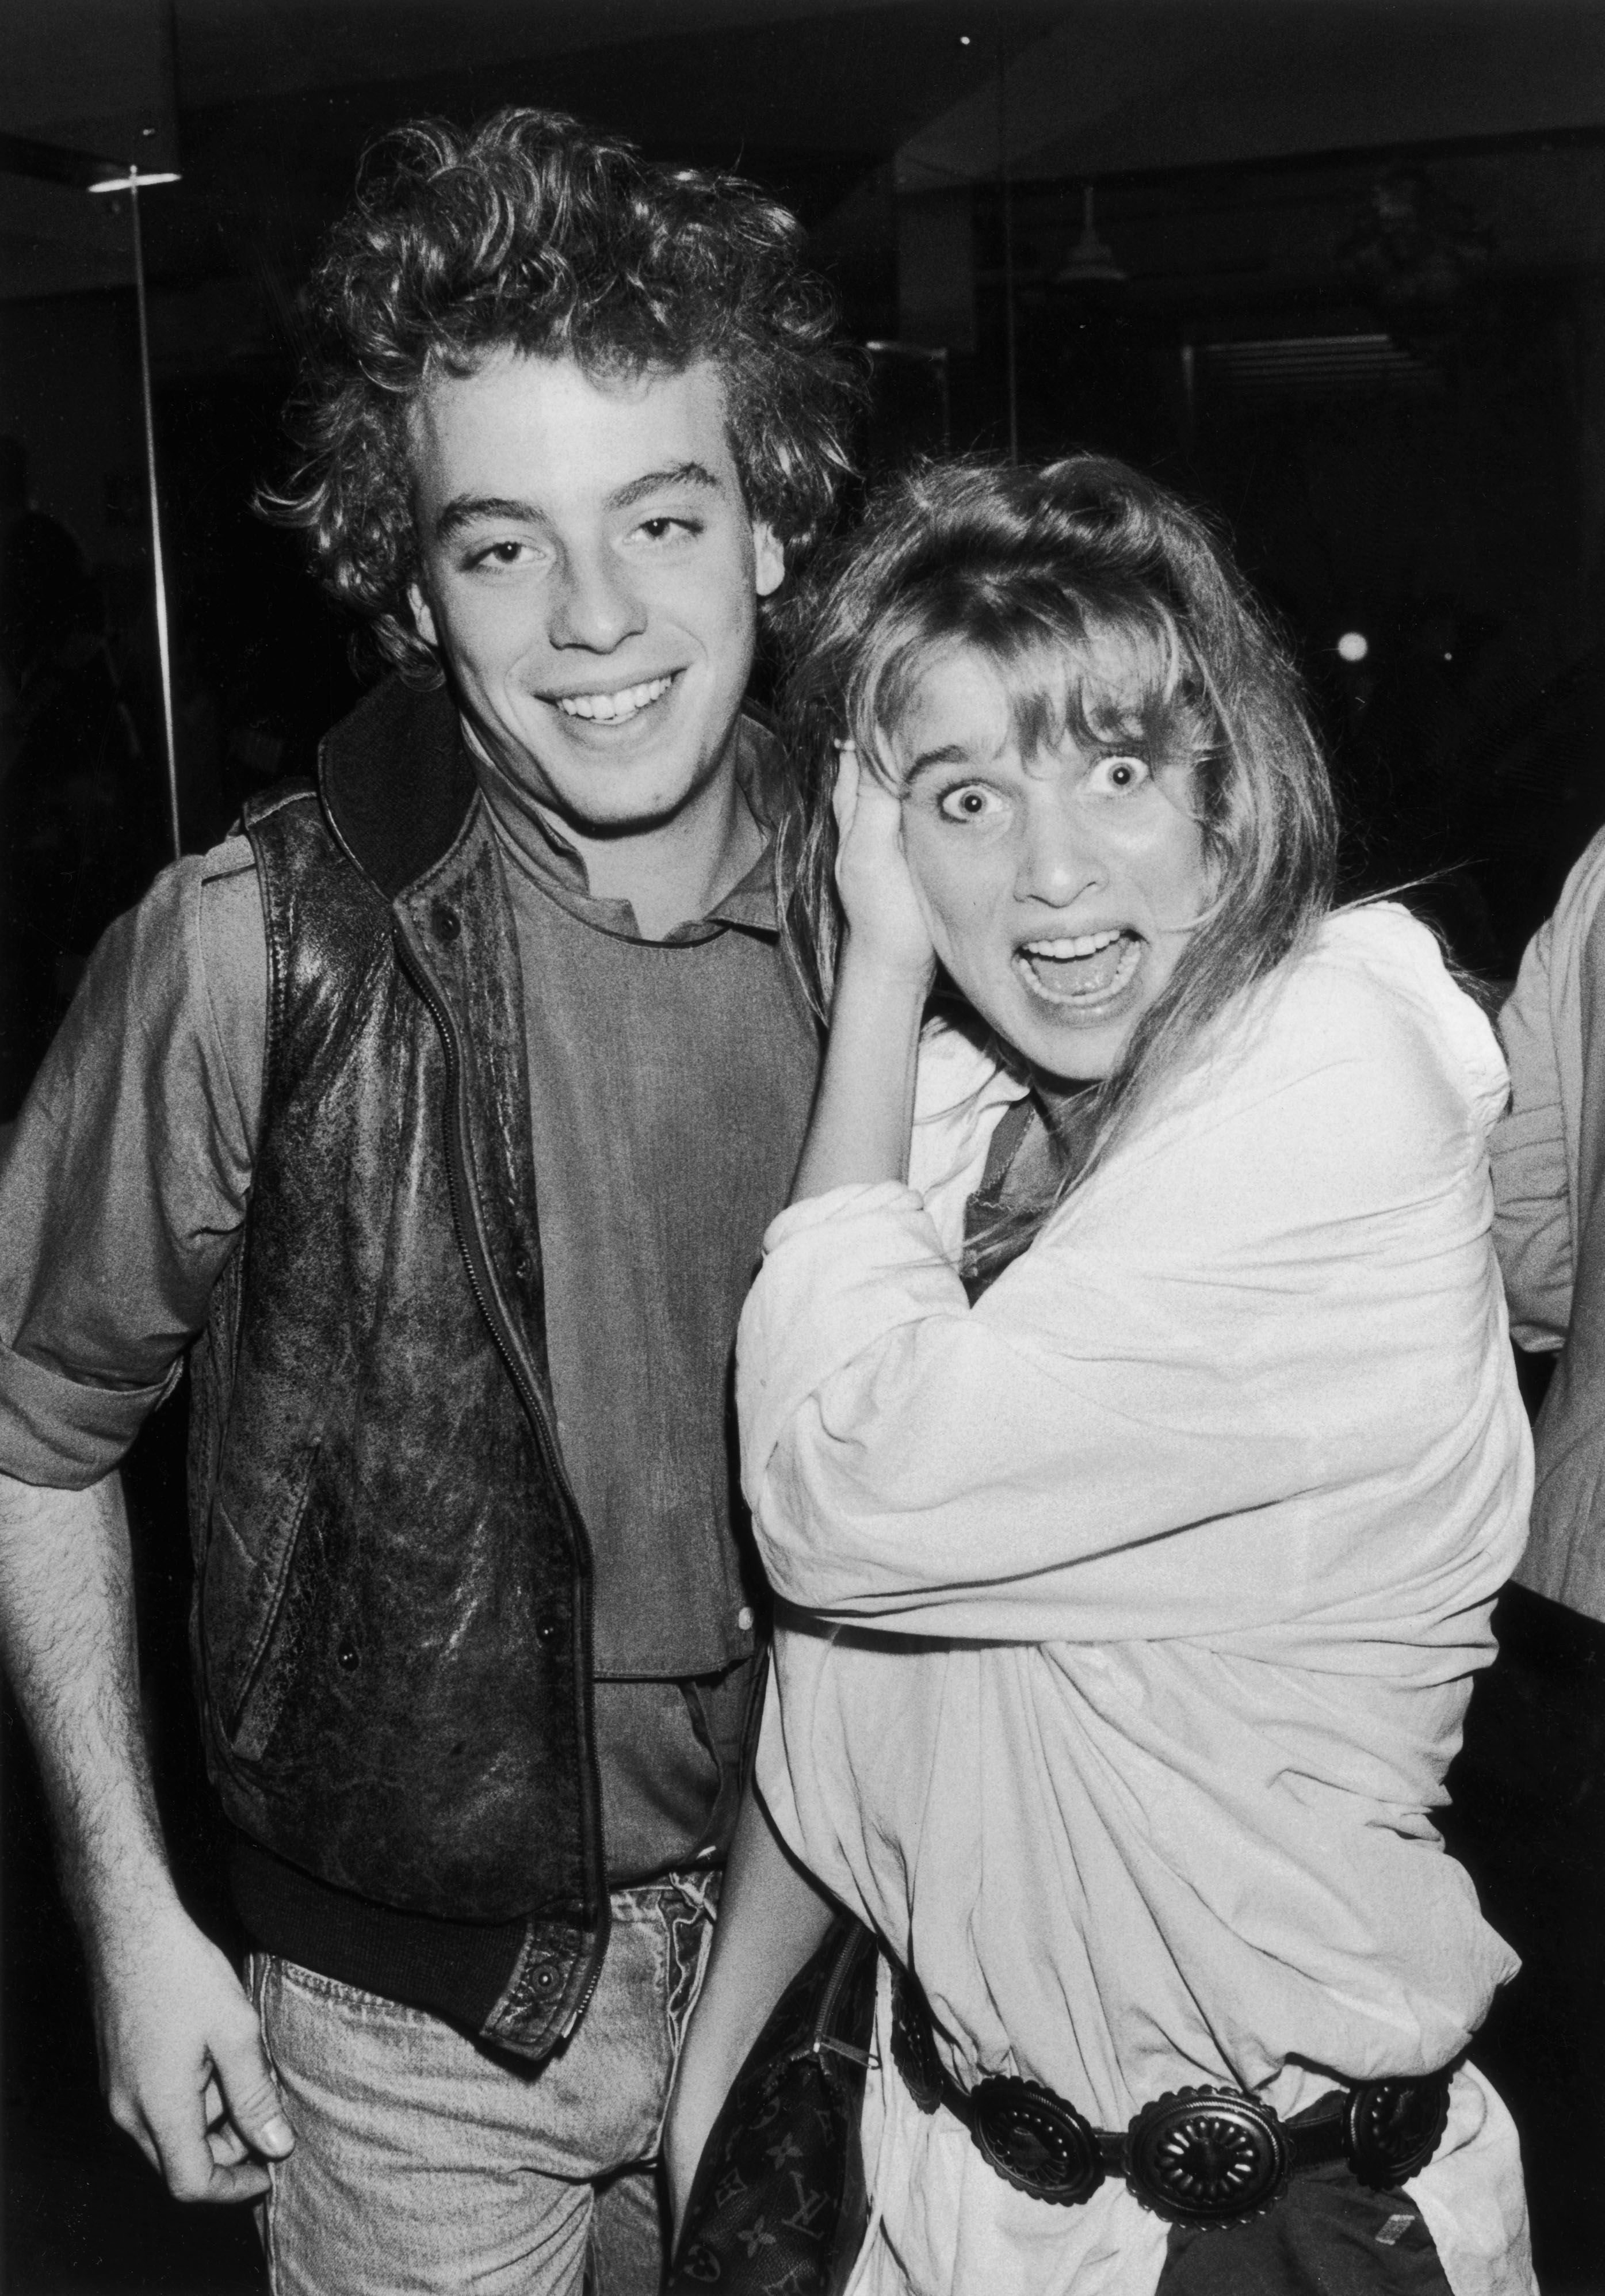 Leif Garrett and Nicollette Sheridan, circa 1980. | Source: Getty Images